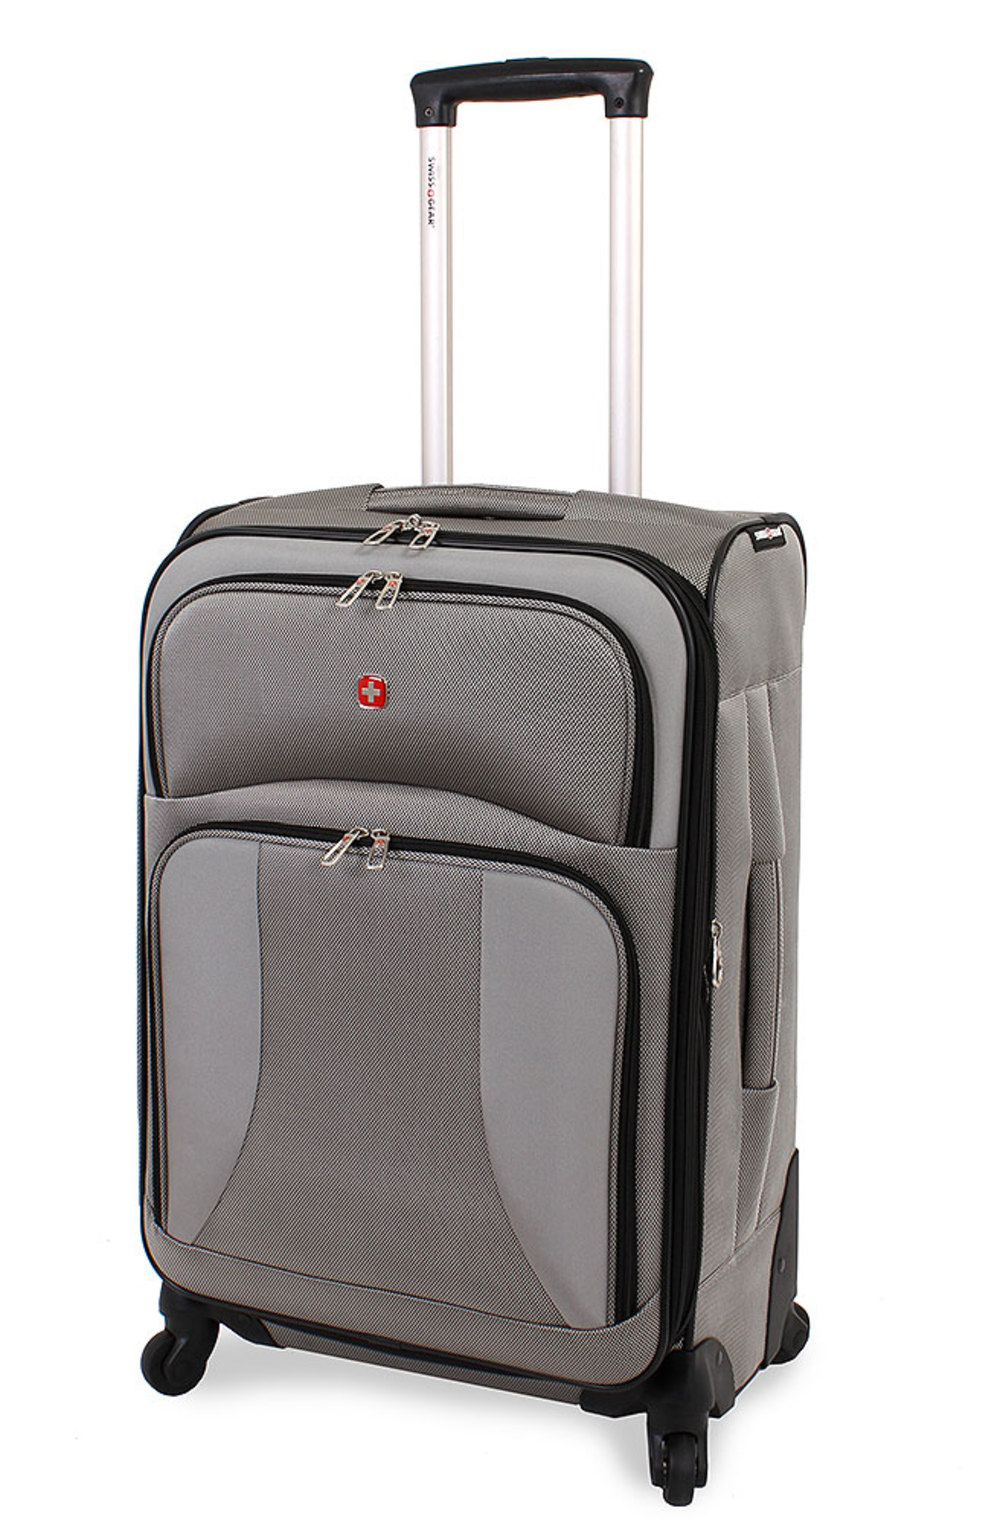 7211 24-inch Grey Medium Expandable Spinner Upright Suitcase - image 1 of 2